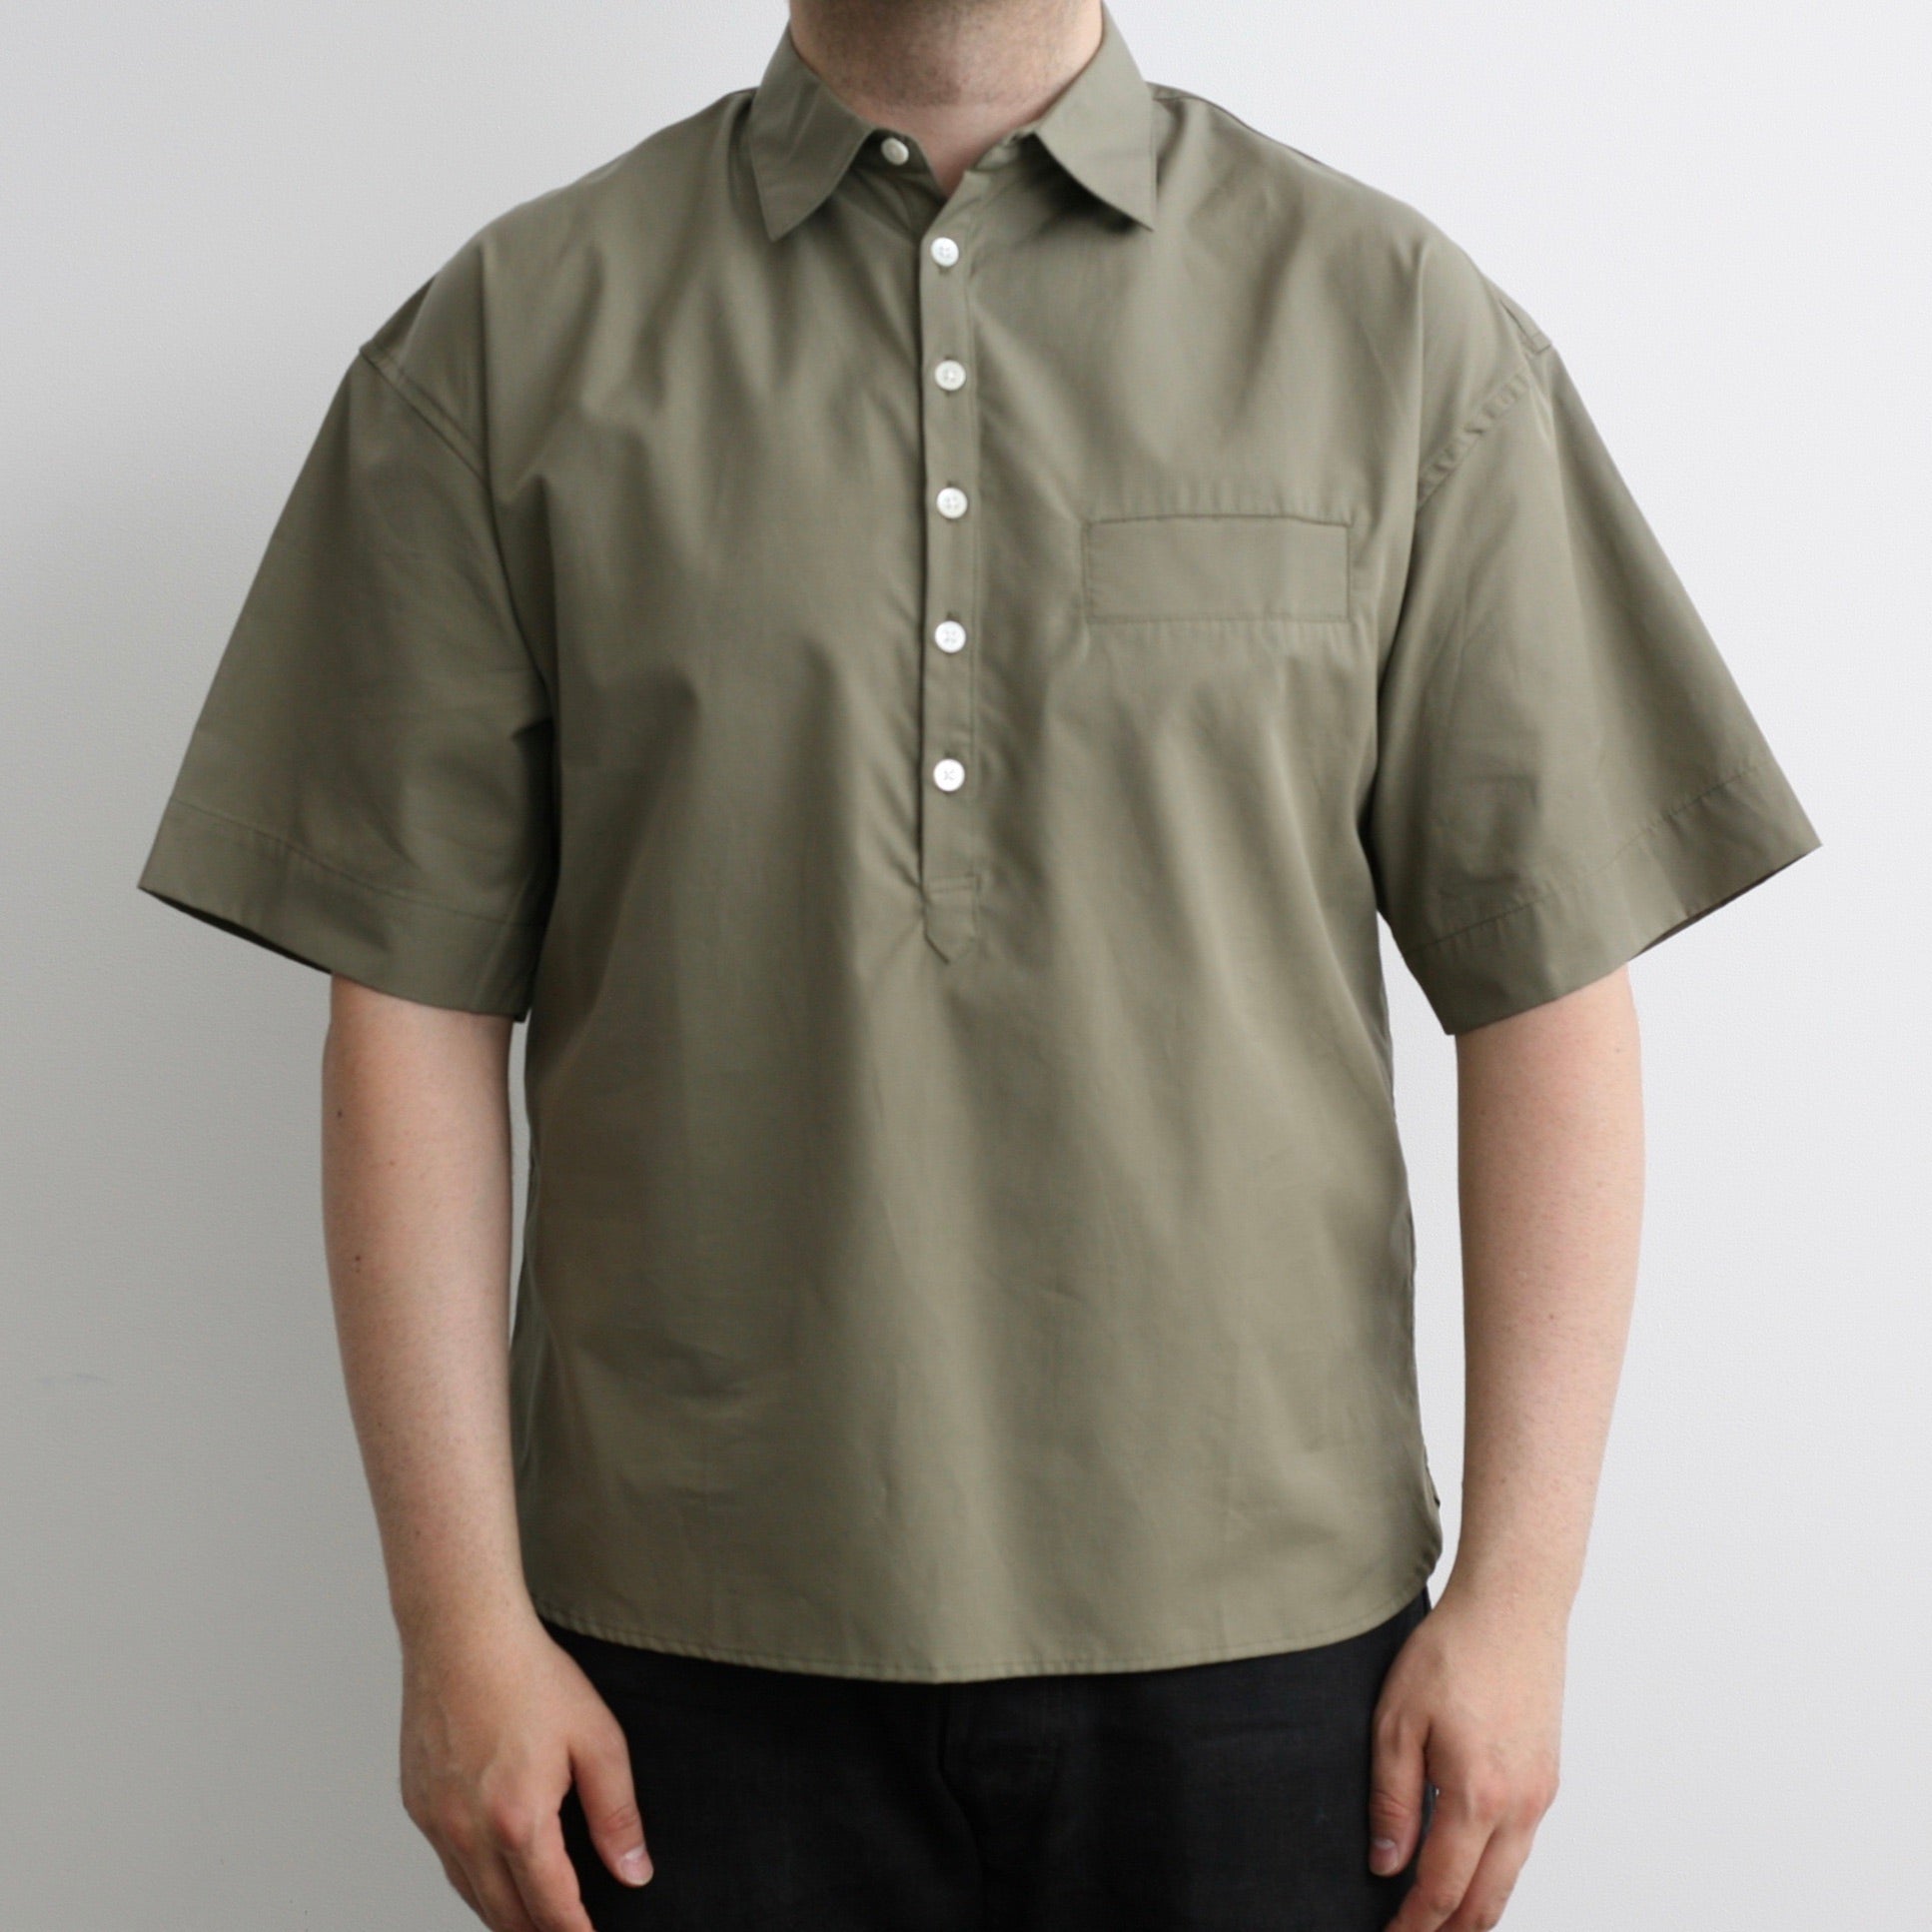 "Shiosaino" Cotton Shirts in Olive